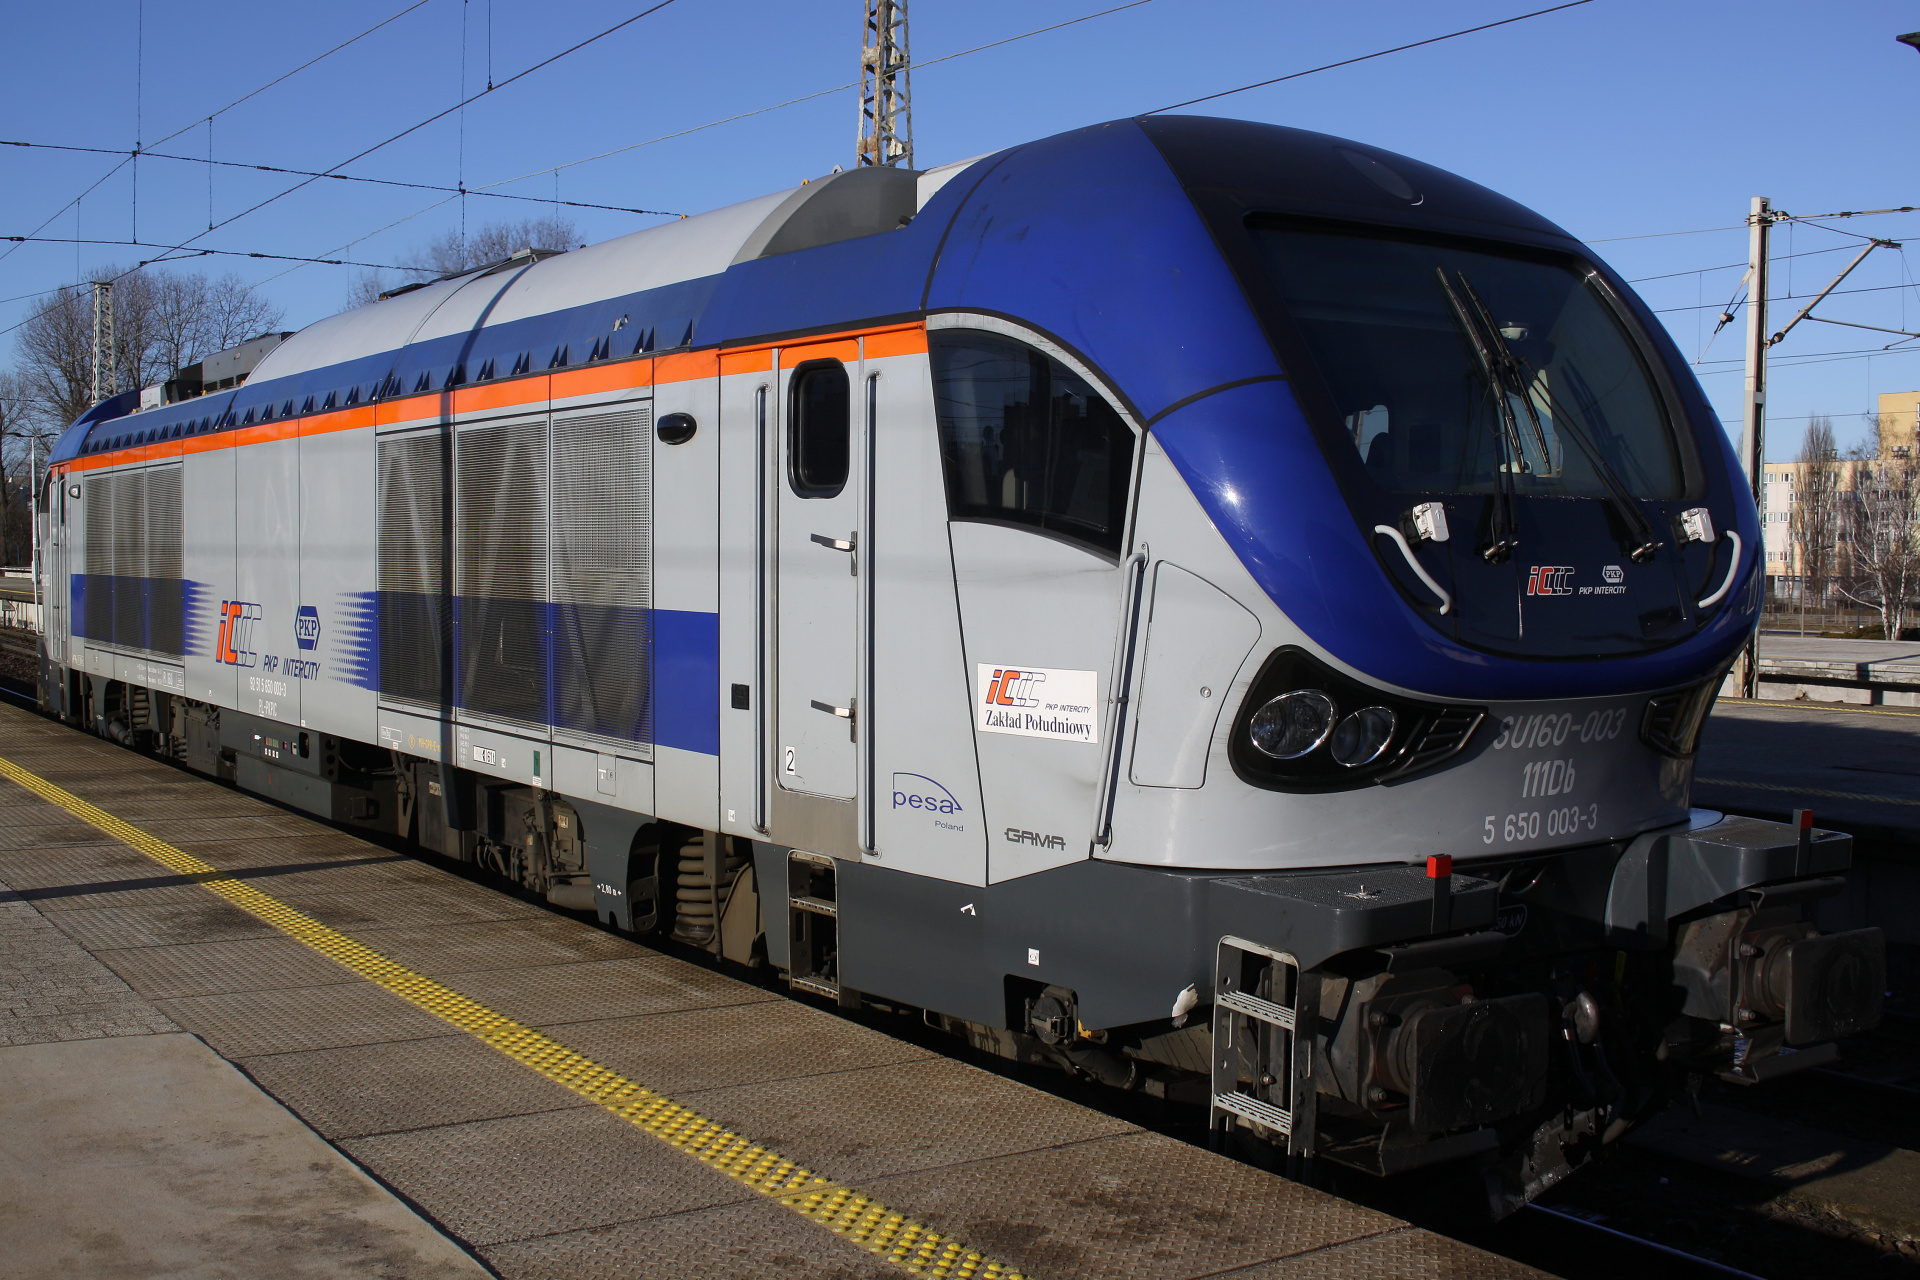 111Db SU160-003 (Vehicles » Trains and Locomotives » Pesa Gama)